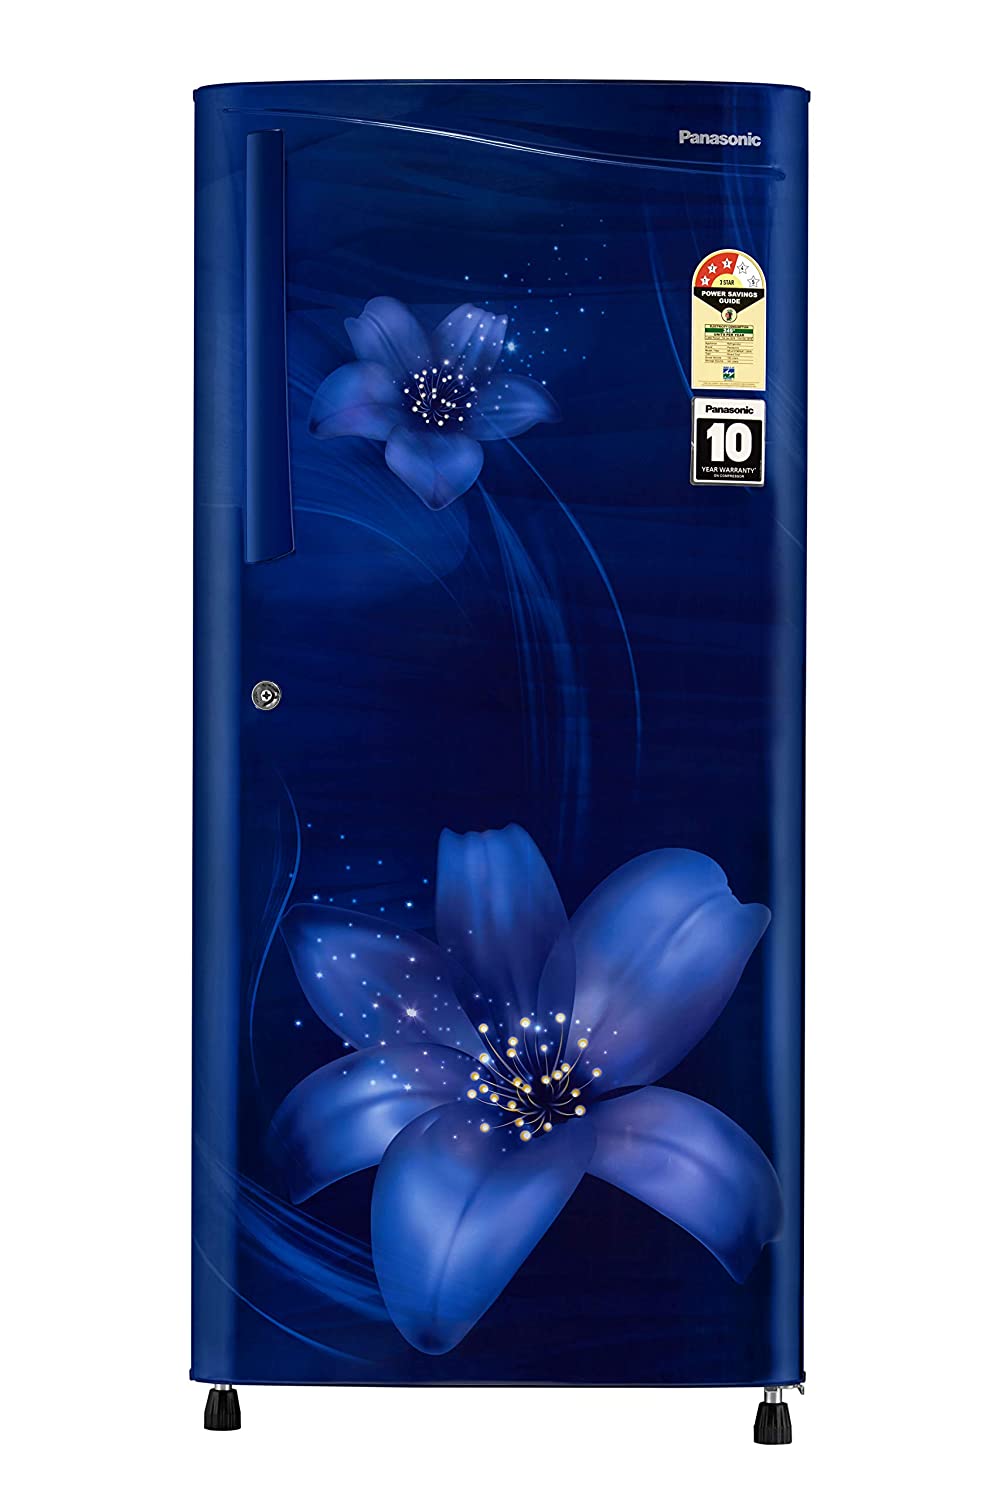 Panasonic 194 L 3 Star Inverter Direct-cool Single Door Refrigerator Nr-a193vfax1 Blue Floral